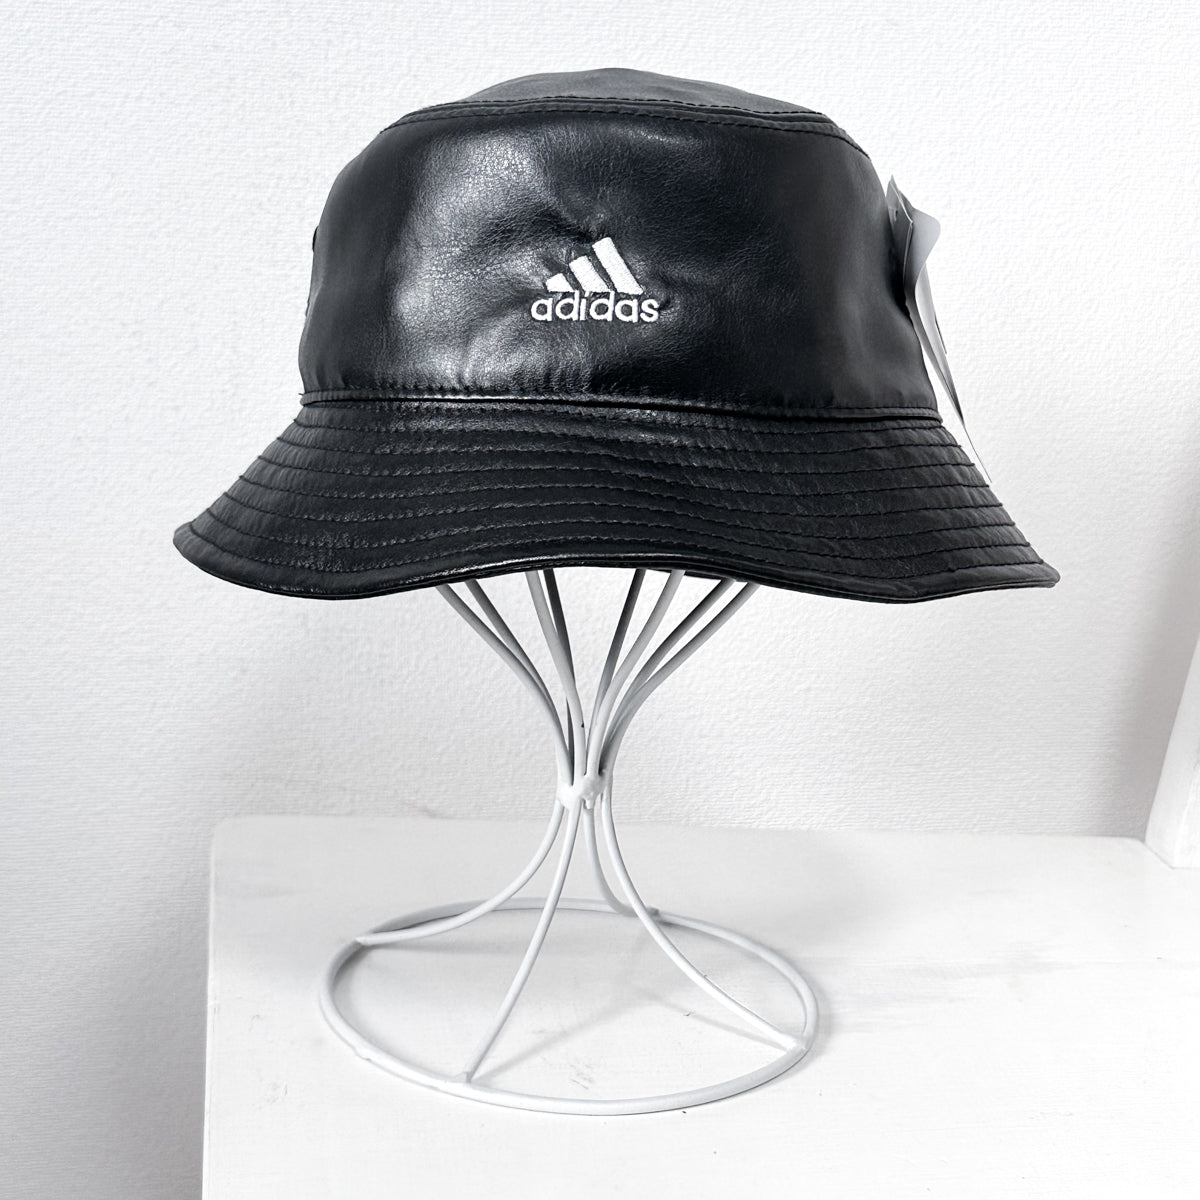 Adidas PU Leather Bucket Hat Black - YOUAREMYPOISON